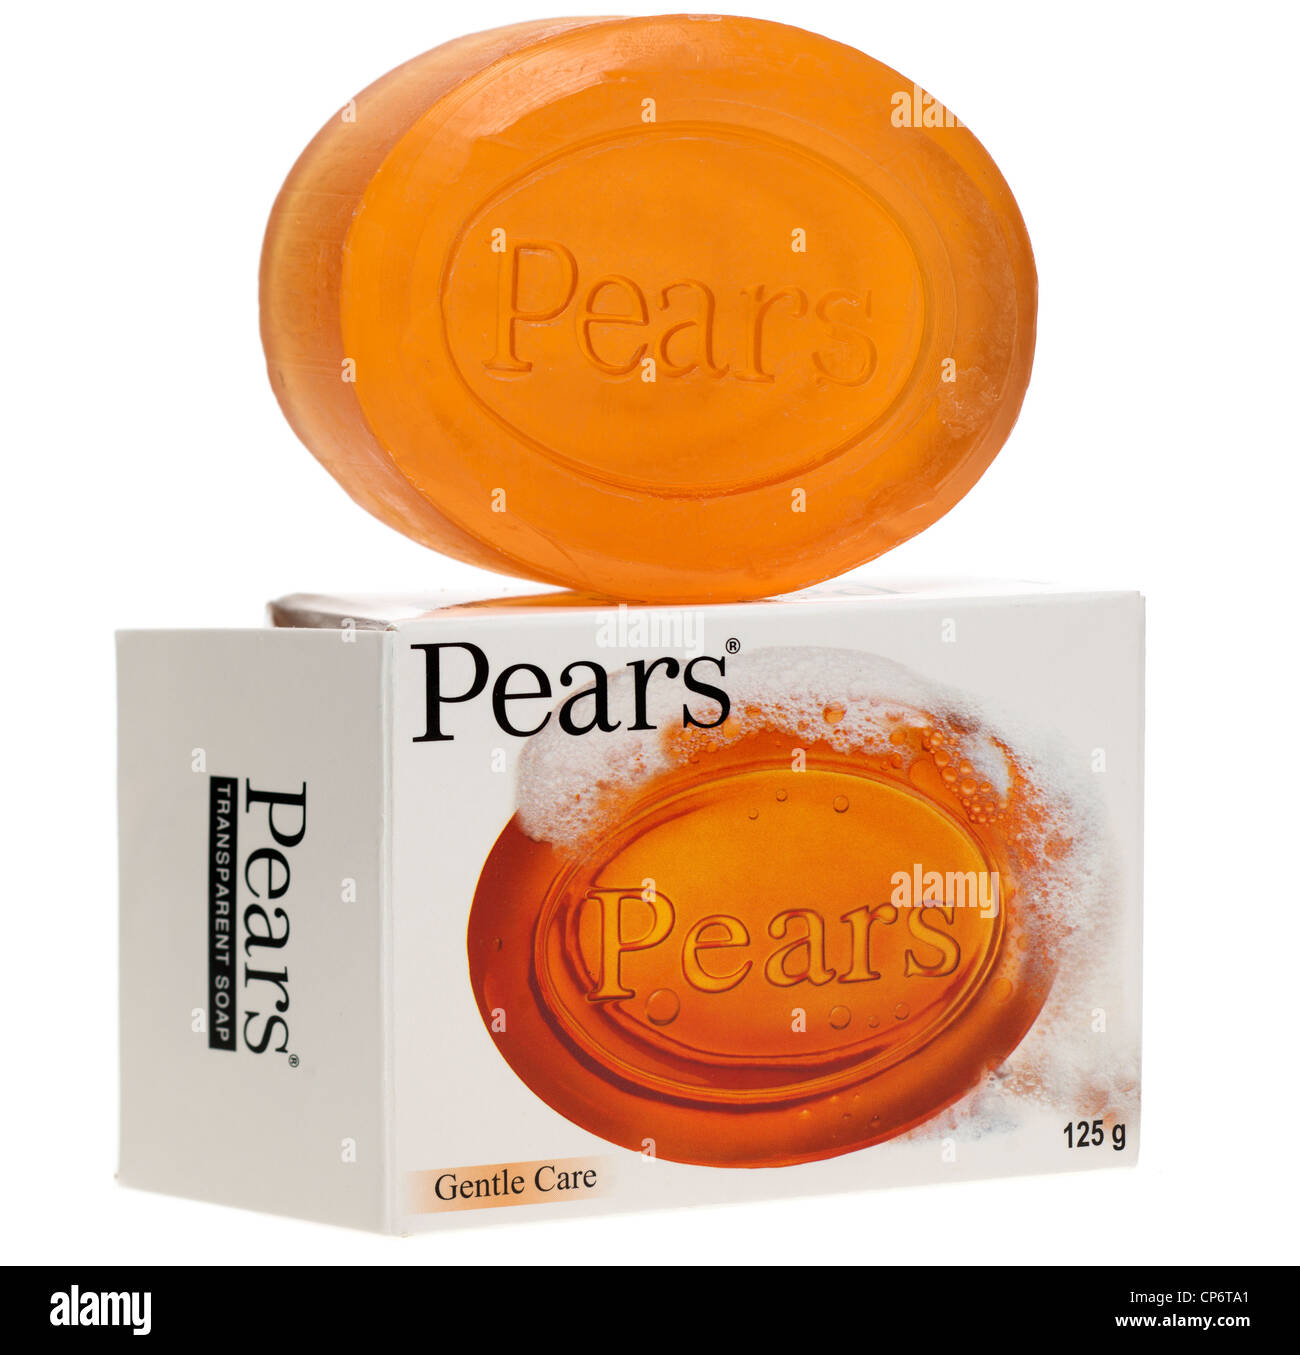 Pears soap -Fotos und -Bildmaterial in hoher Auflösung – Alamy